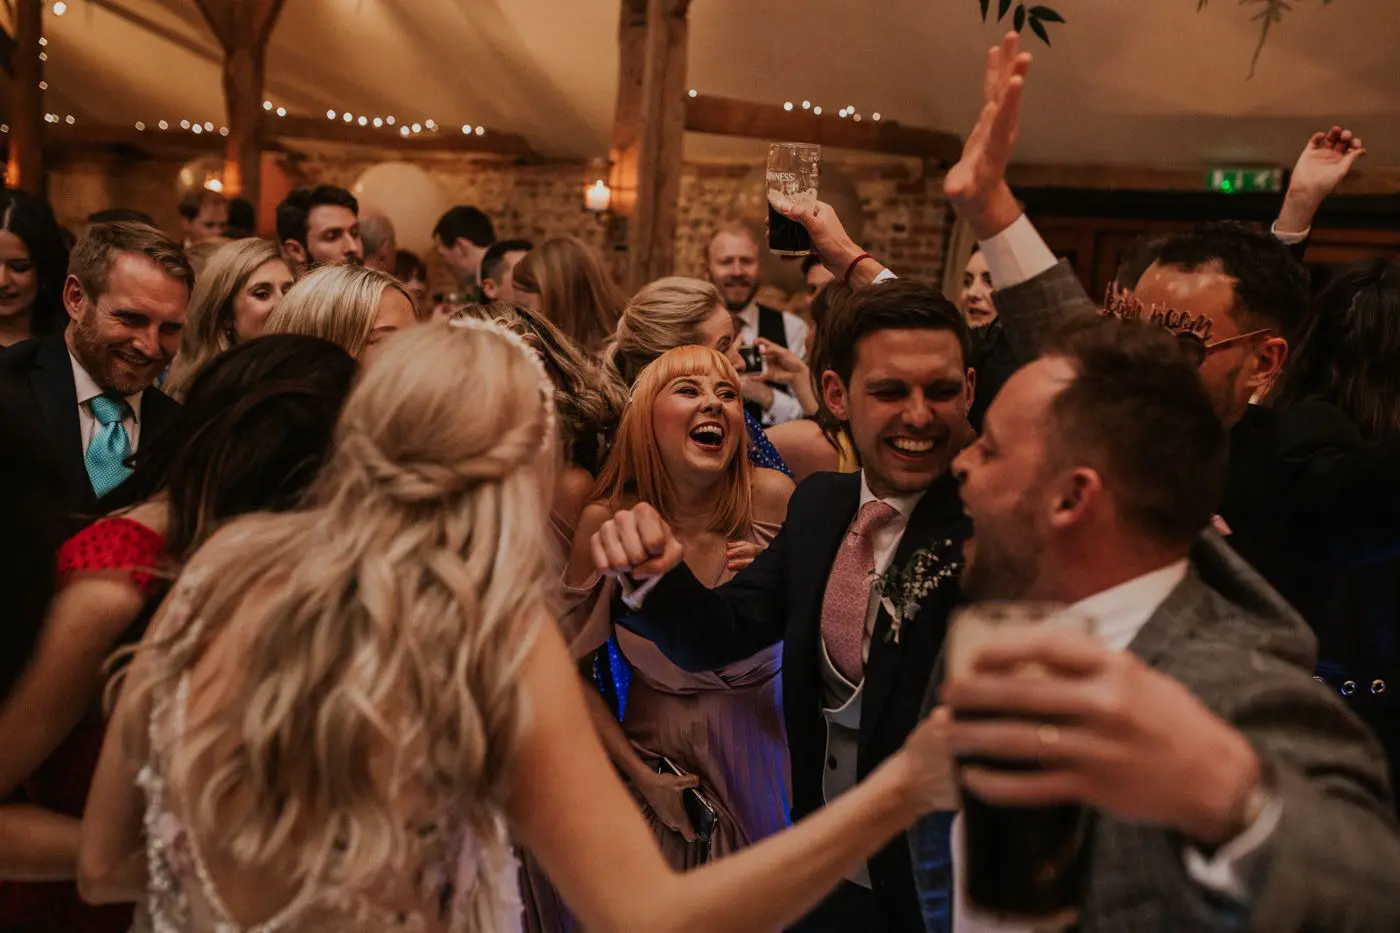 upwaltham barns wedding gallery receptions guests dancing